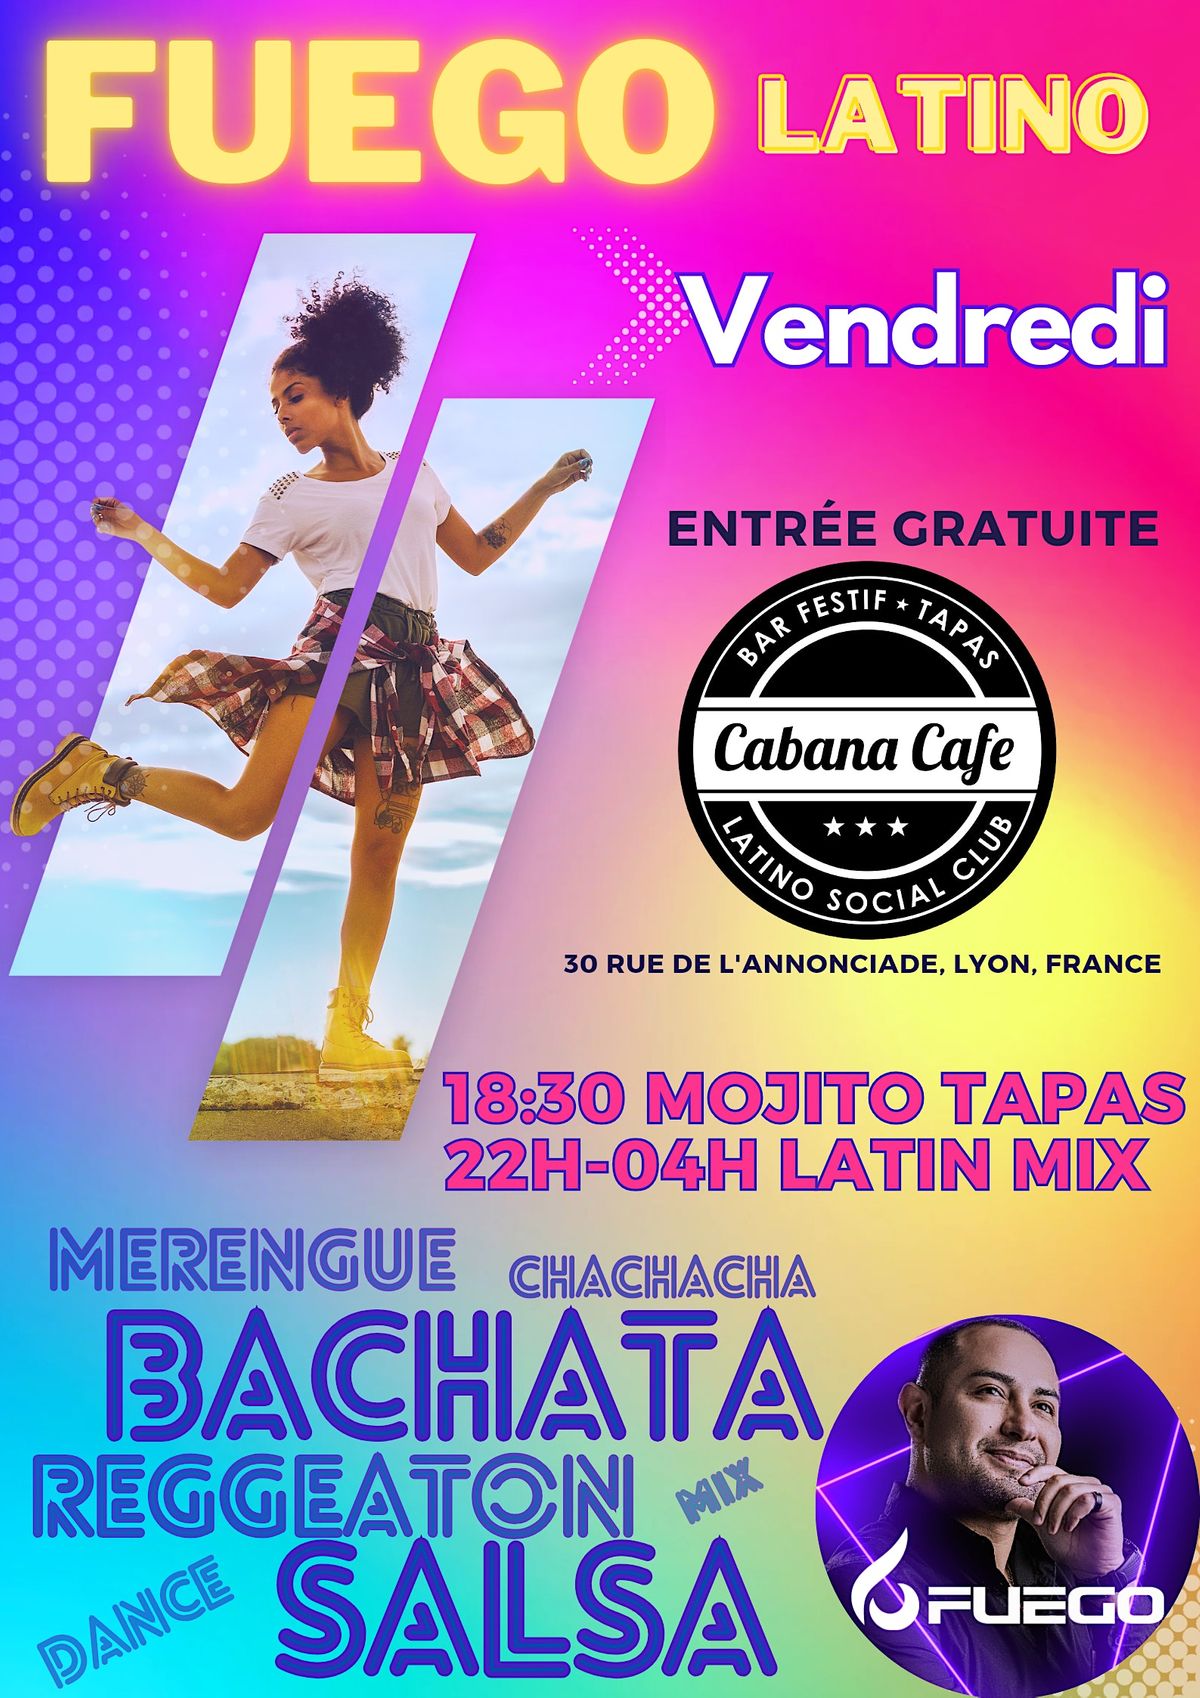 Fuego Latino Lat\u00edn party Fiesta Latina salsa bachata merengue reggaet\u00f3n kiz